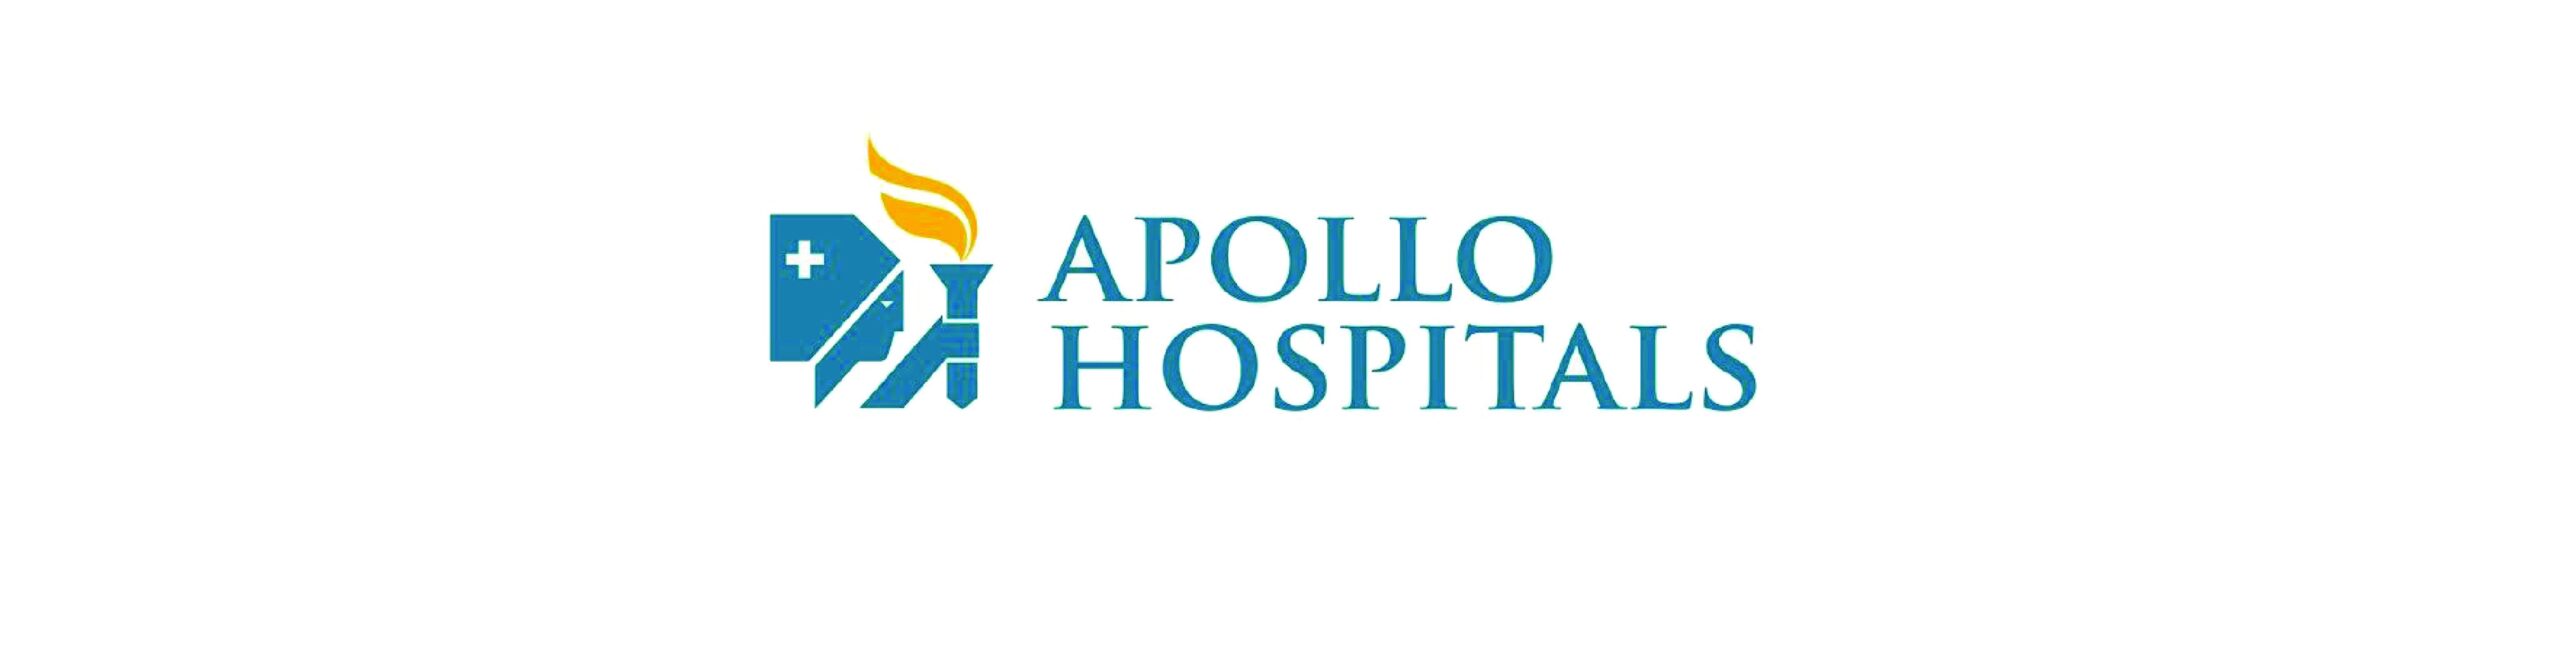 APOLLO-HOSPITALS-LOGO-scaled